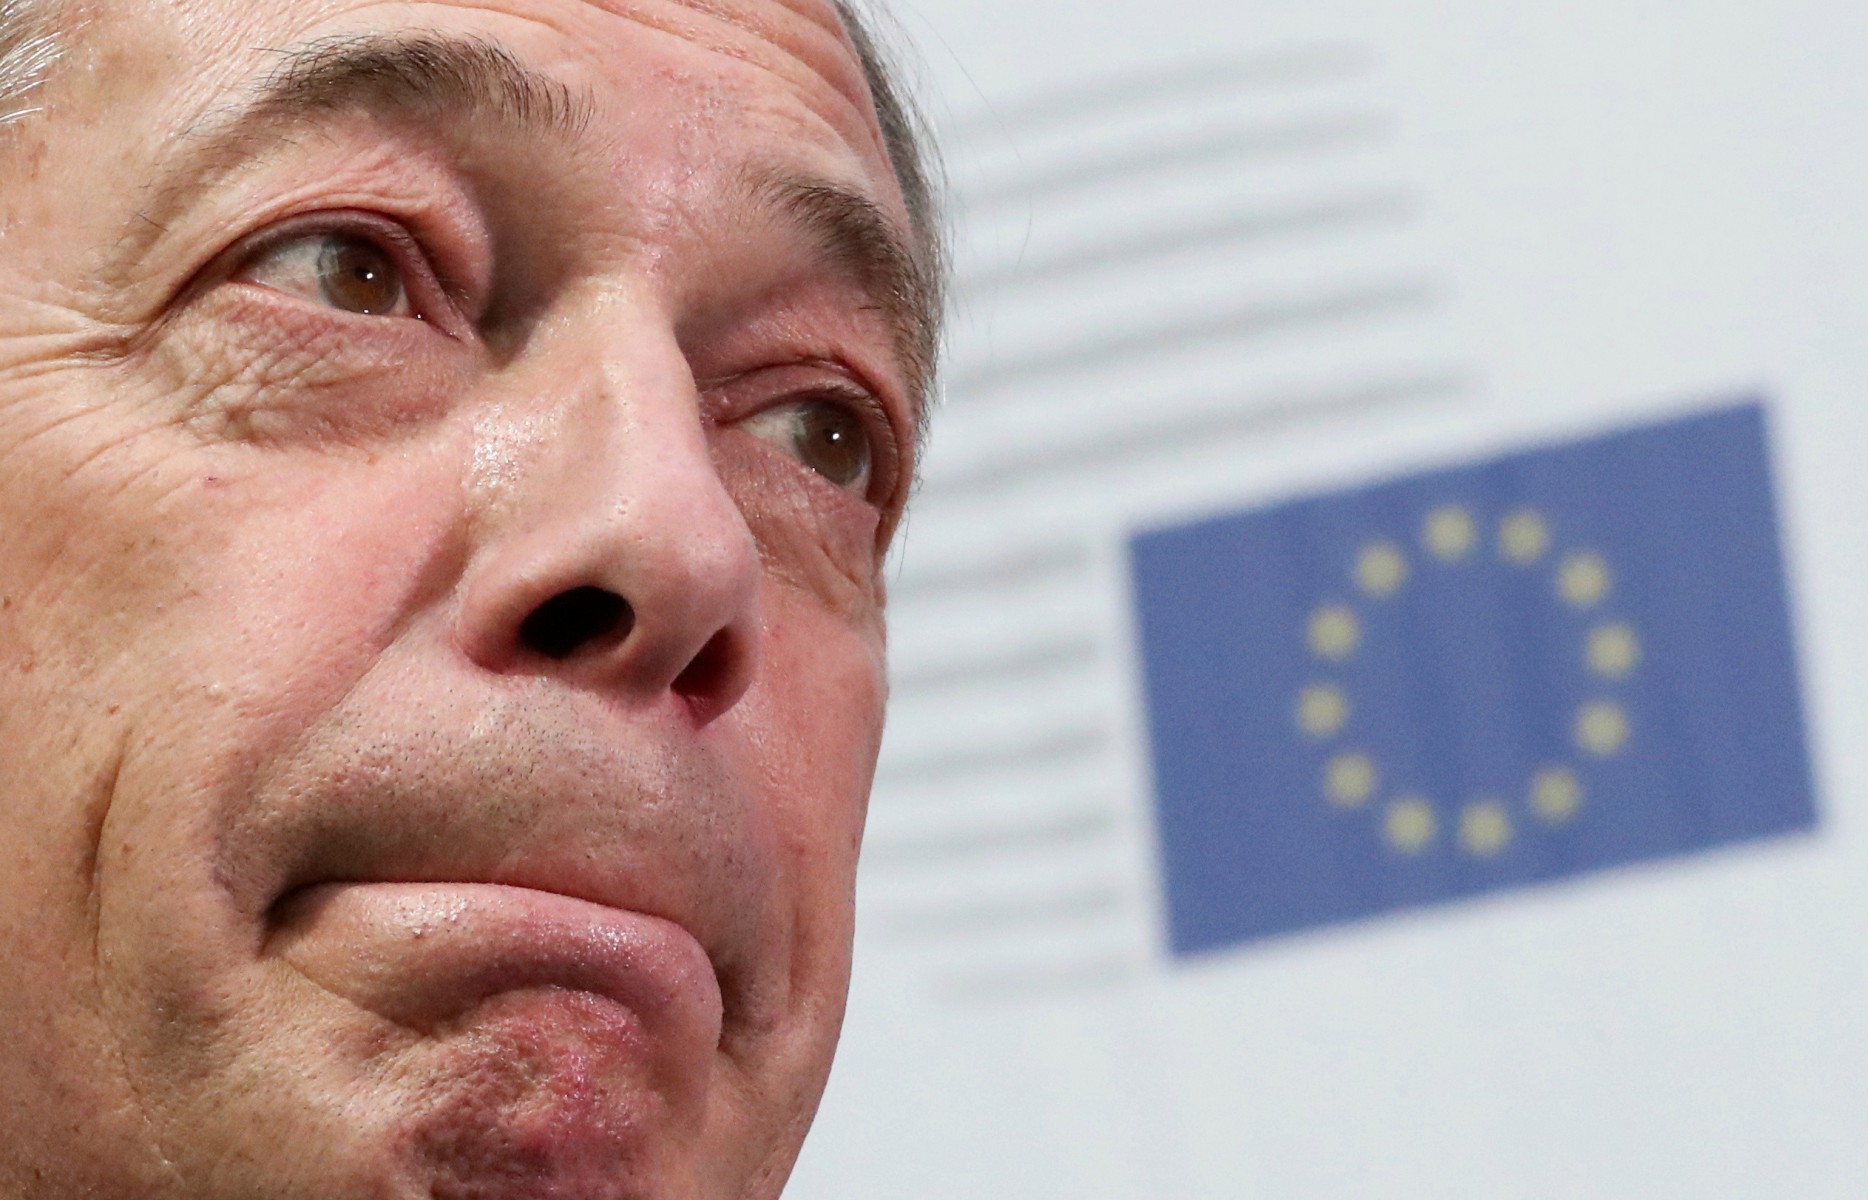 Farage has said he wants to make sure politicians honour the outcome of the EU referendum